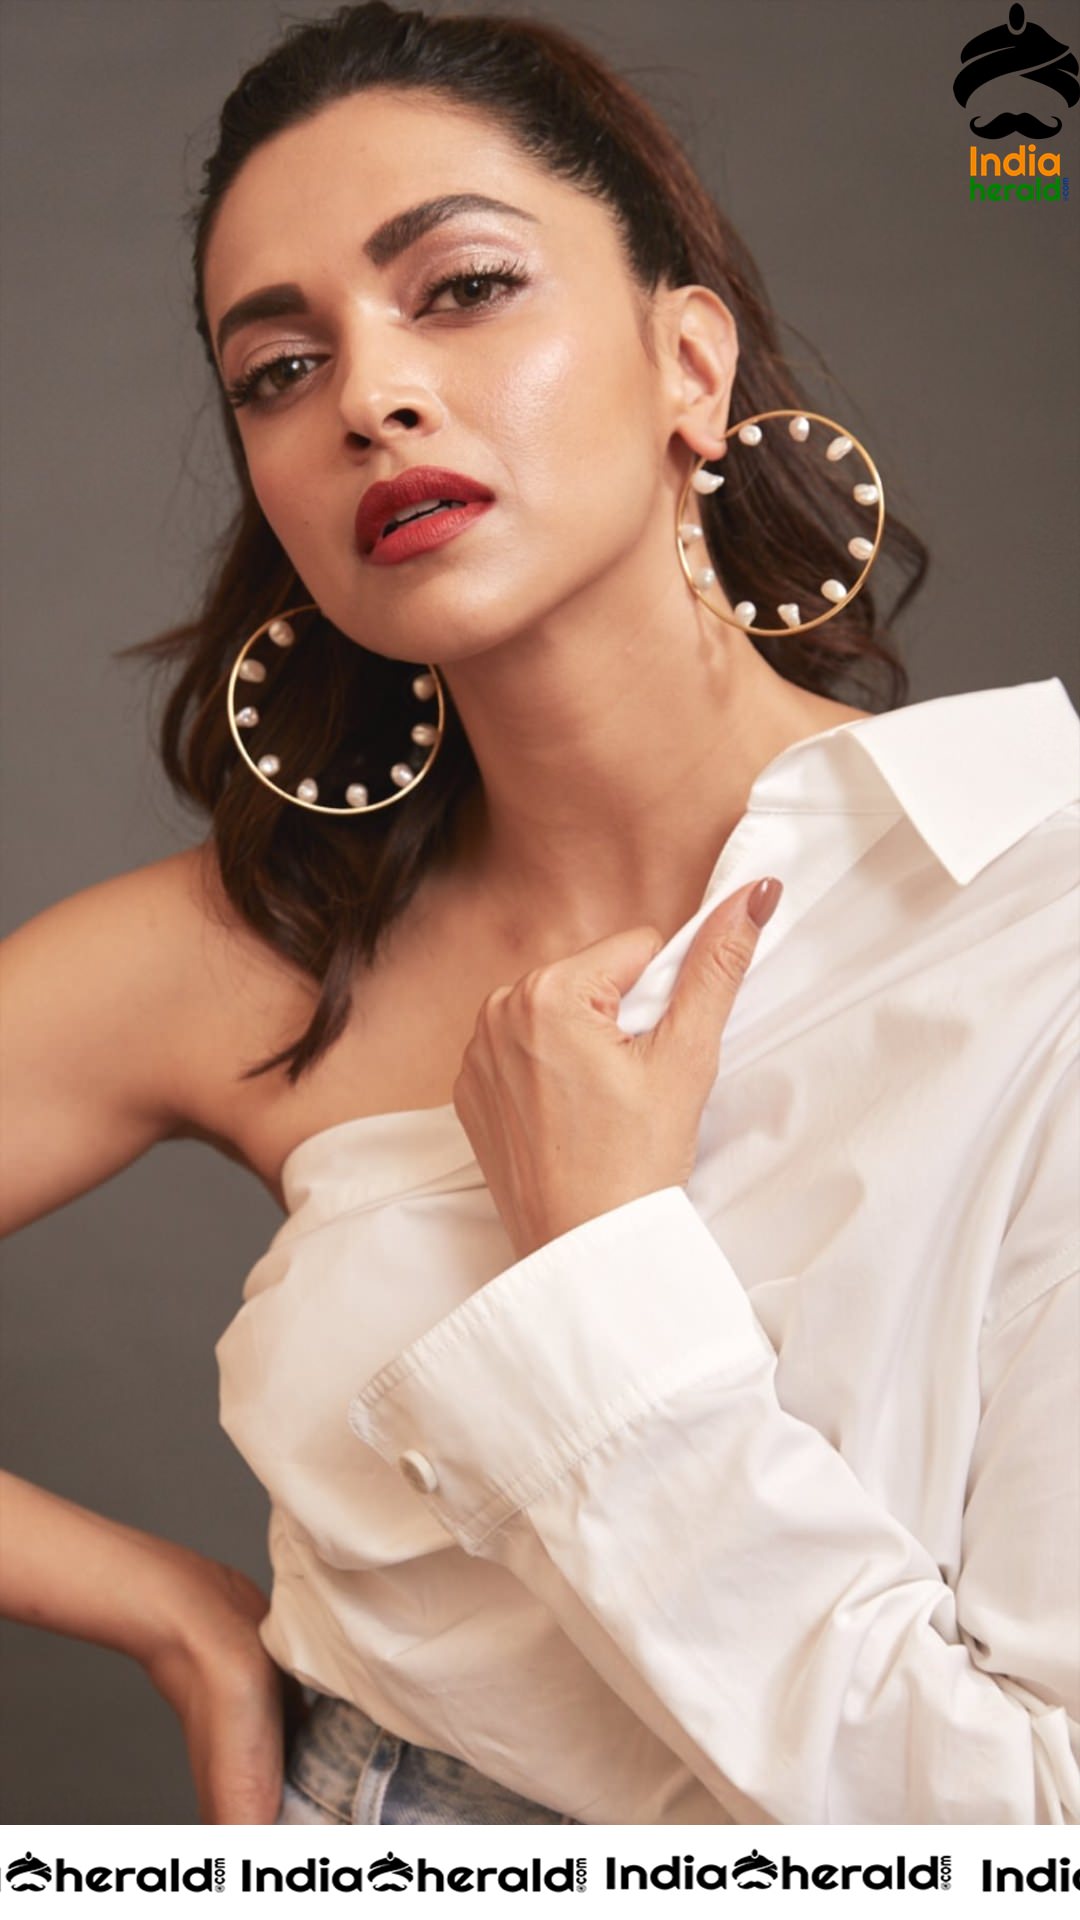 Deepika Padukone Looking So Elegant in this Latest Photoshoot